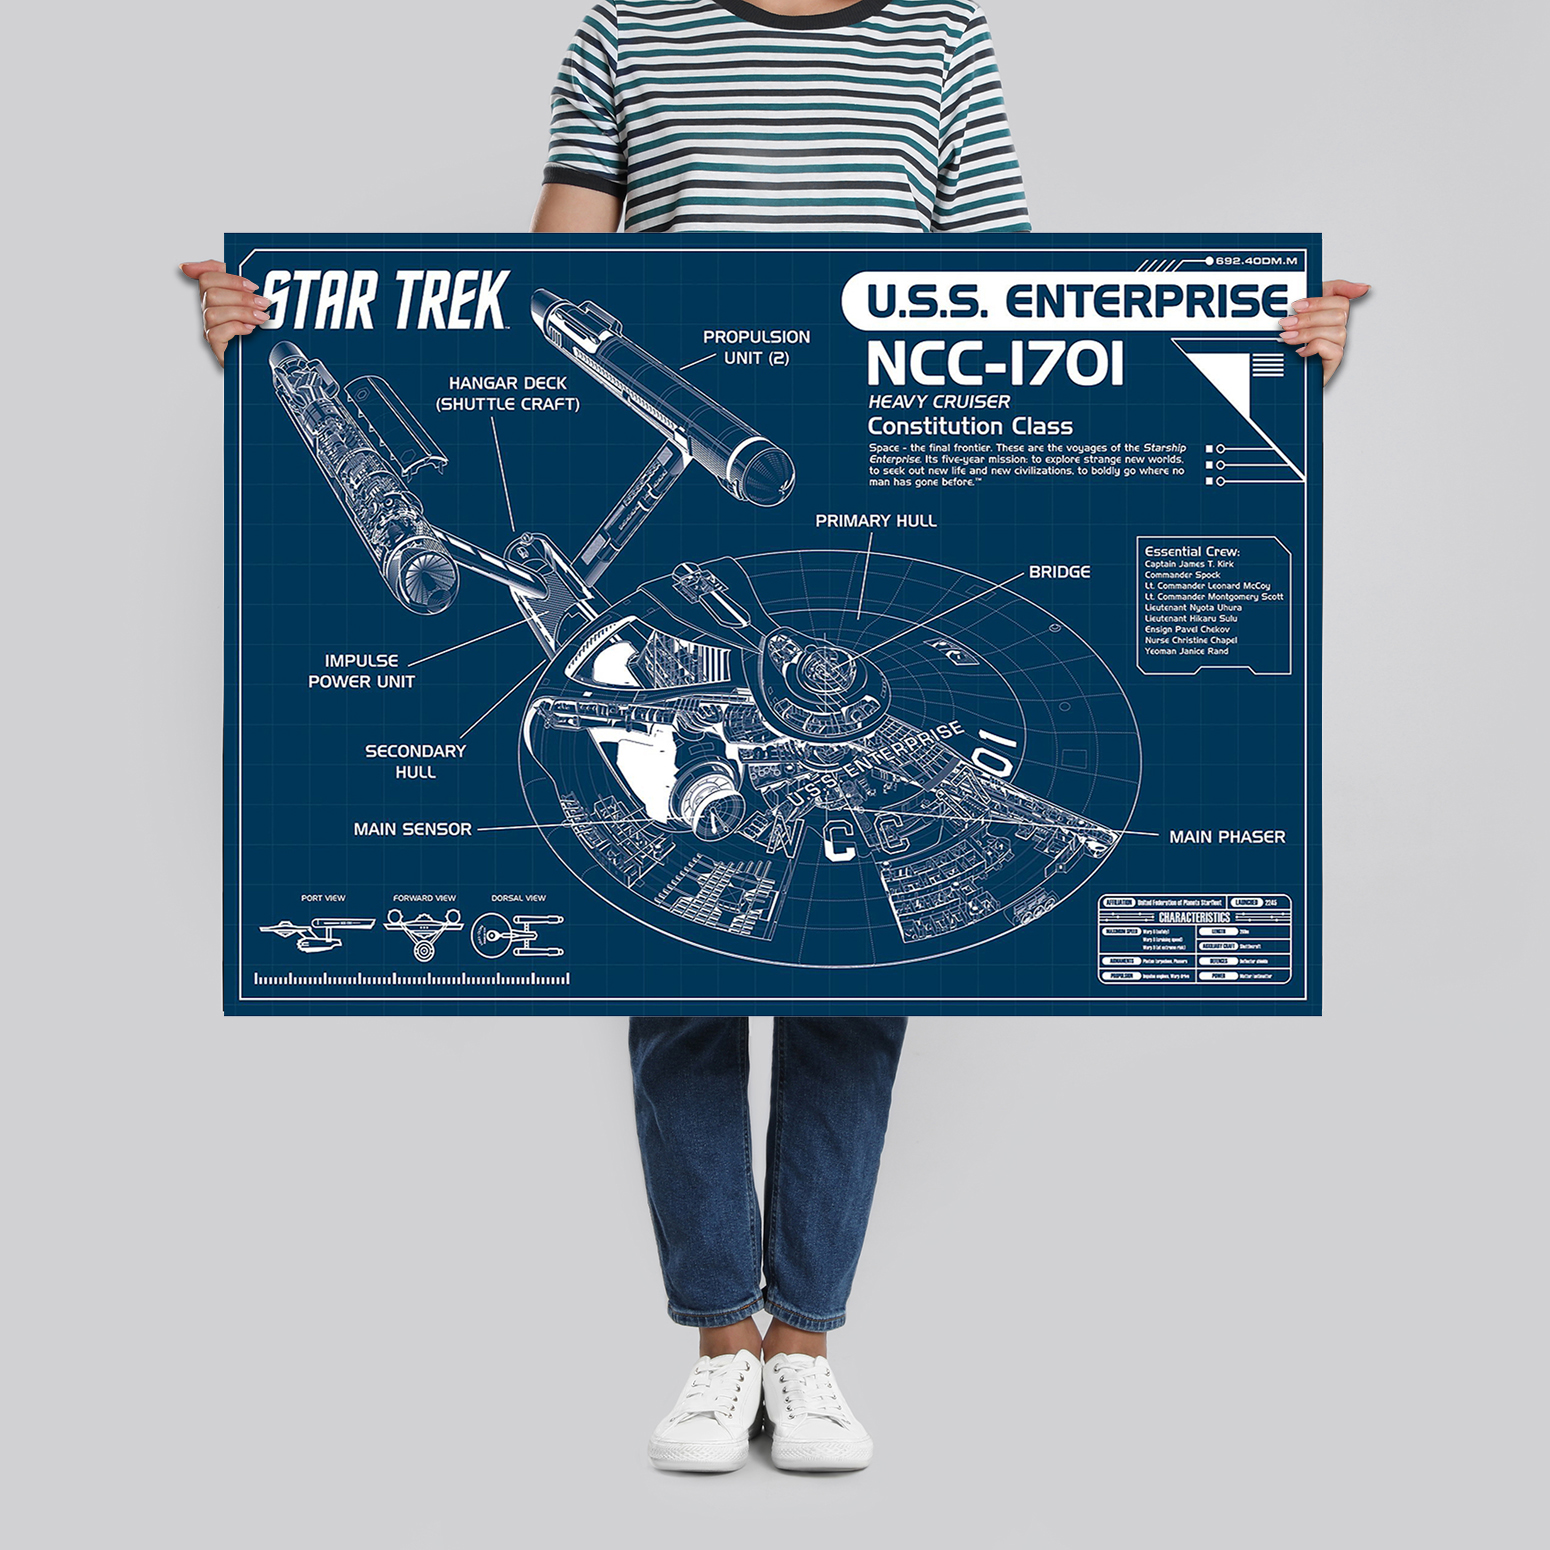 Star Trek U.S.S Voyager NCC 74656 Poster Retro Patent Blueprint Art Print